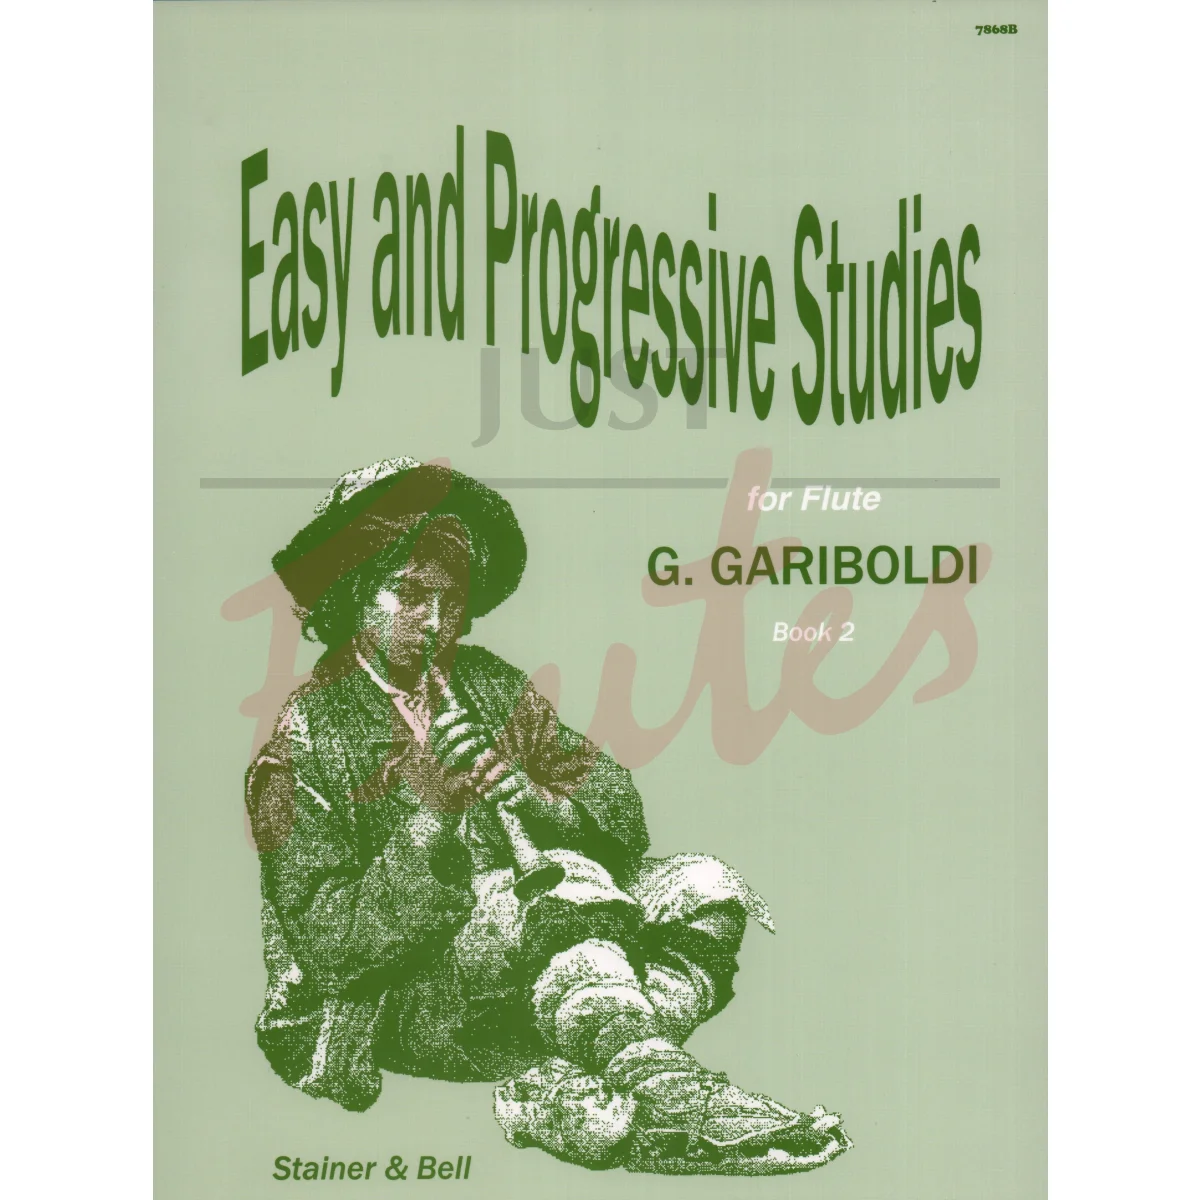 Easy and Progressive Studies for Flute, Book 2